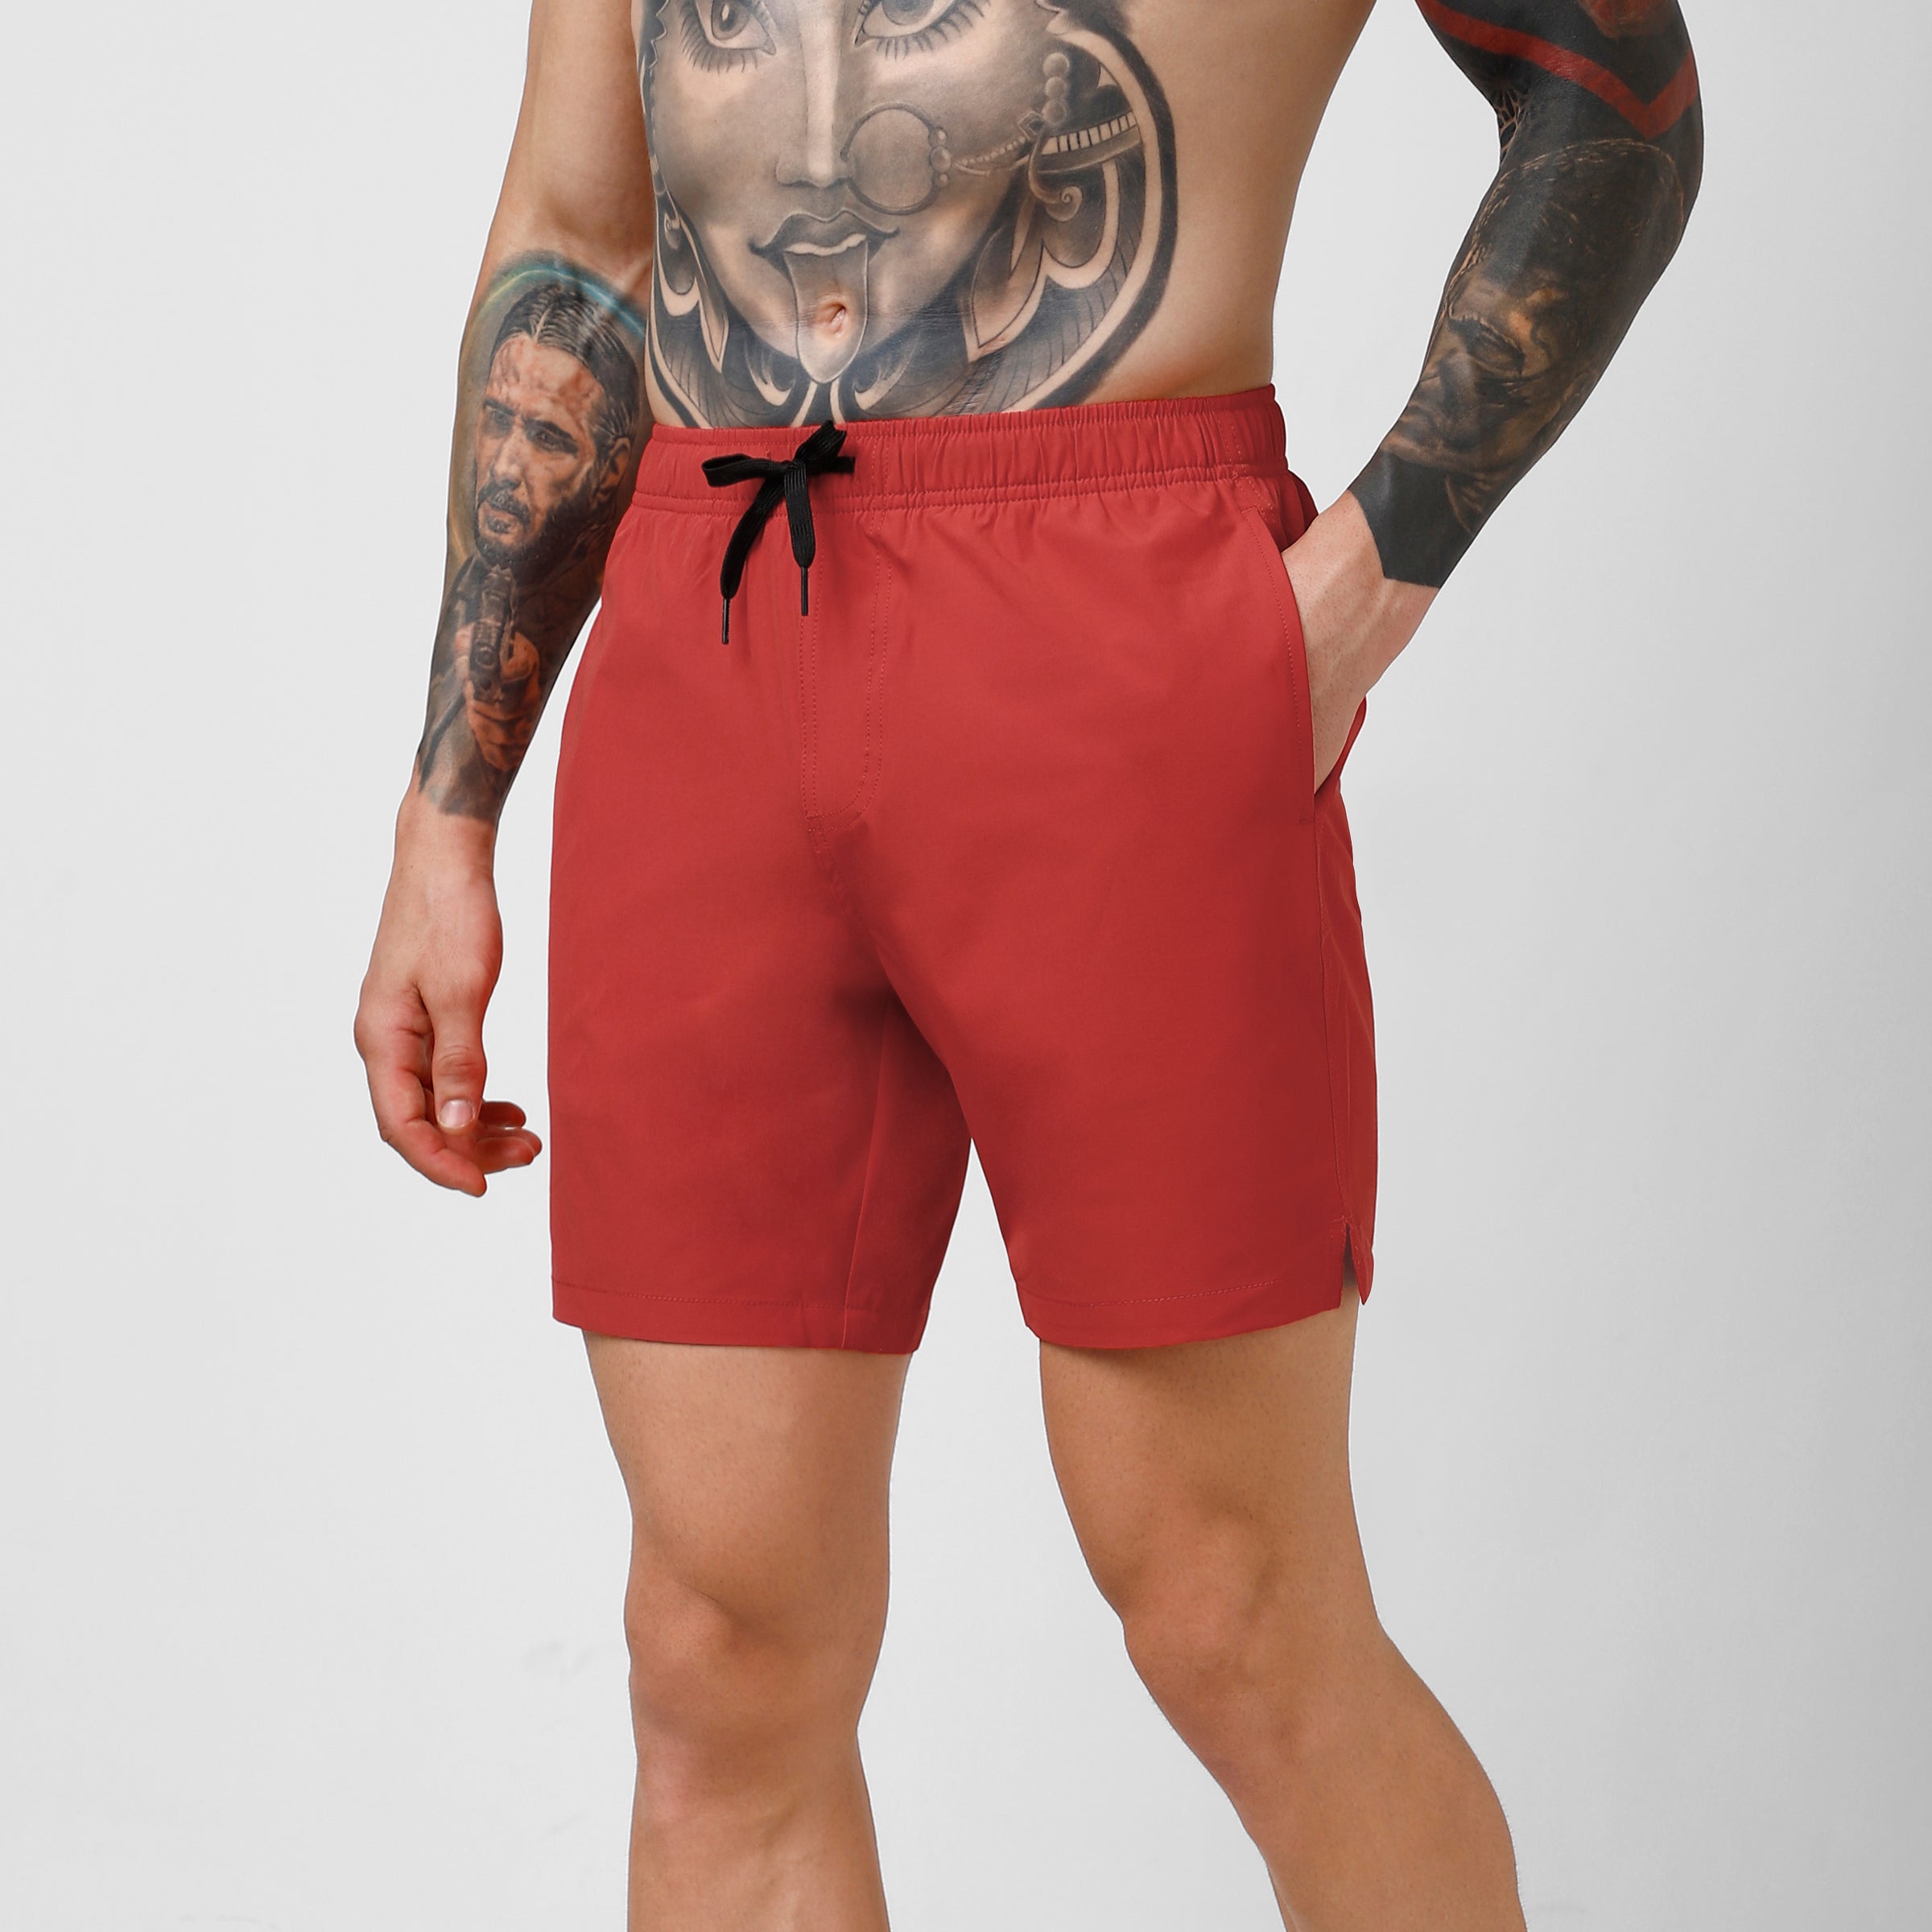 Stretch Swim 7" in Red side on model hand in pocket